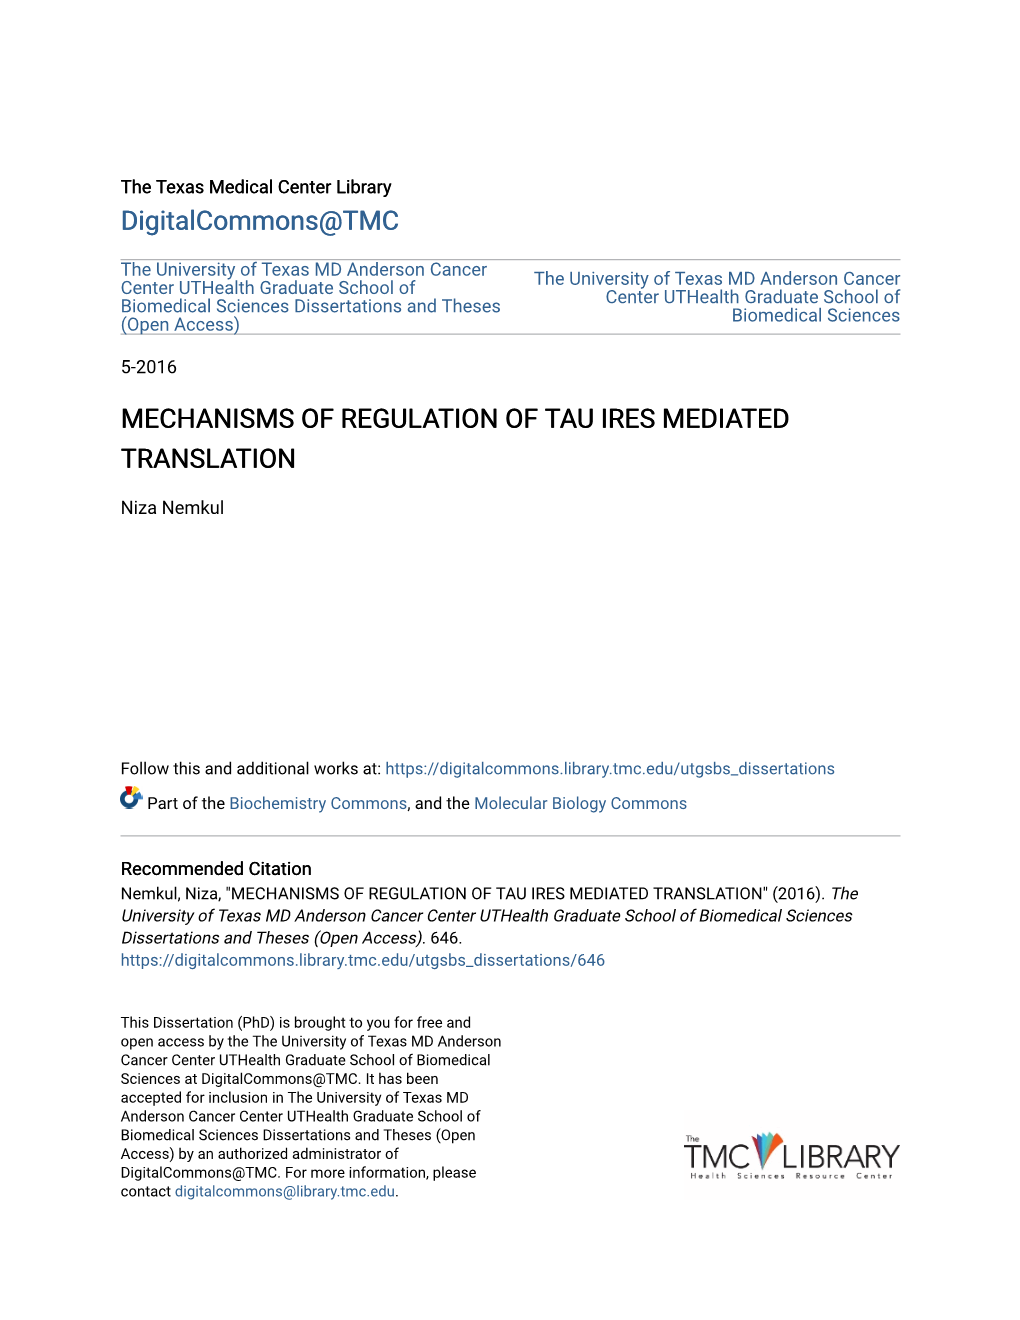 Mechanisms of Regulation of Tau Ires Mediated Translation